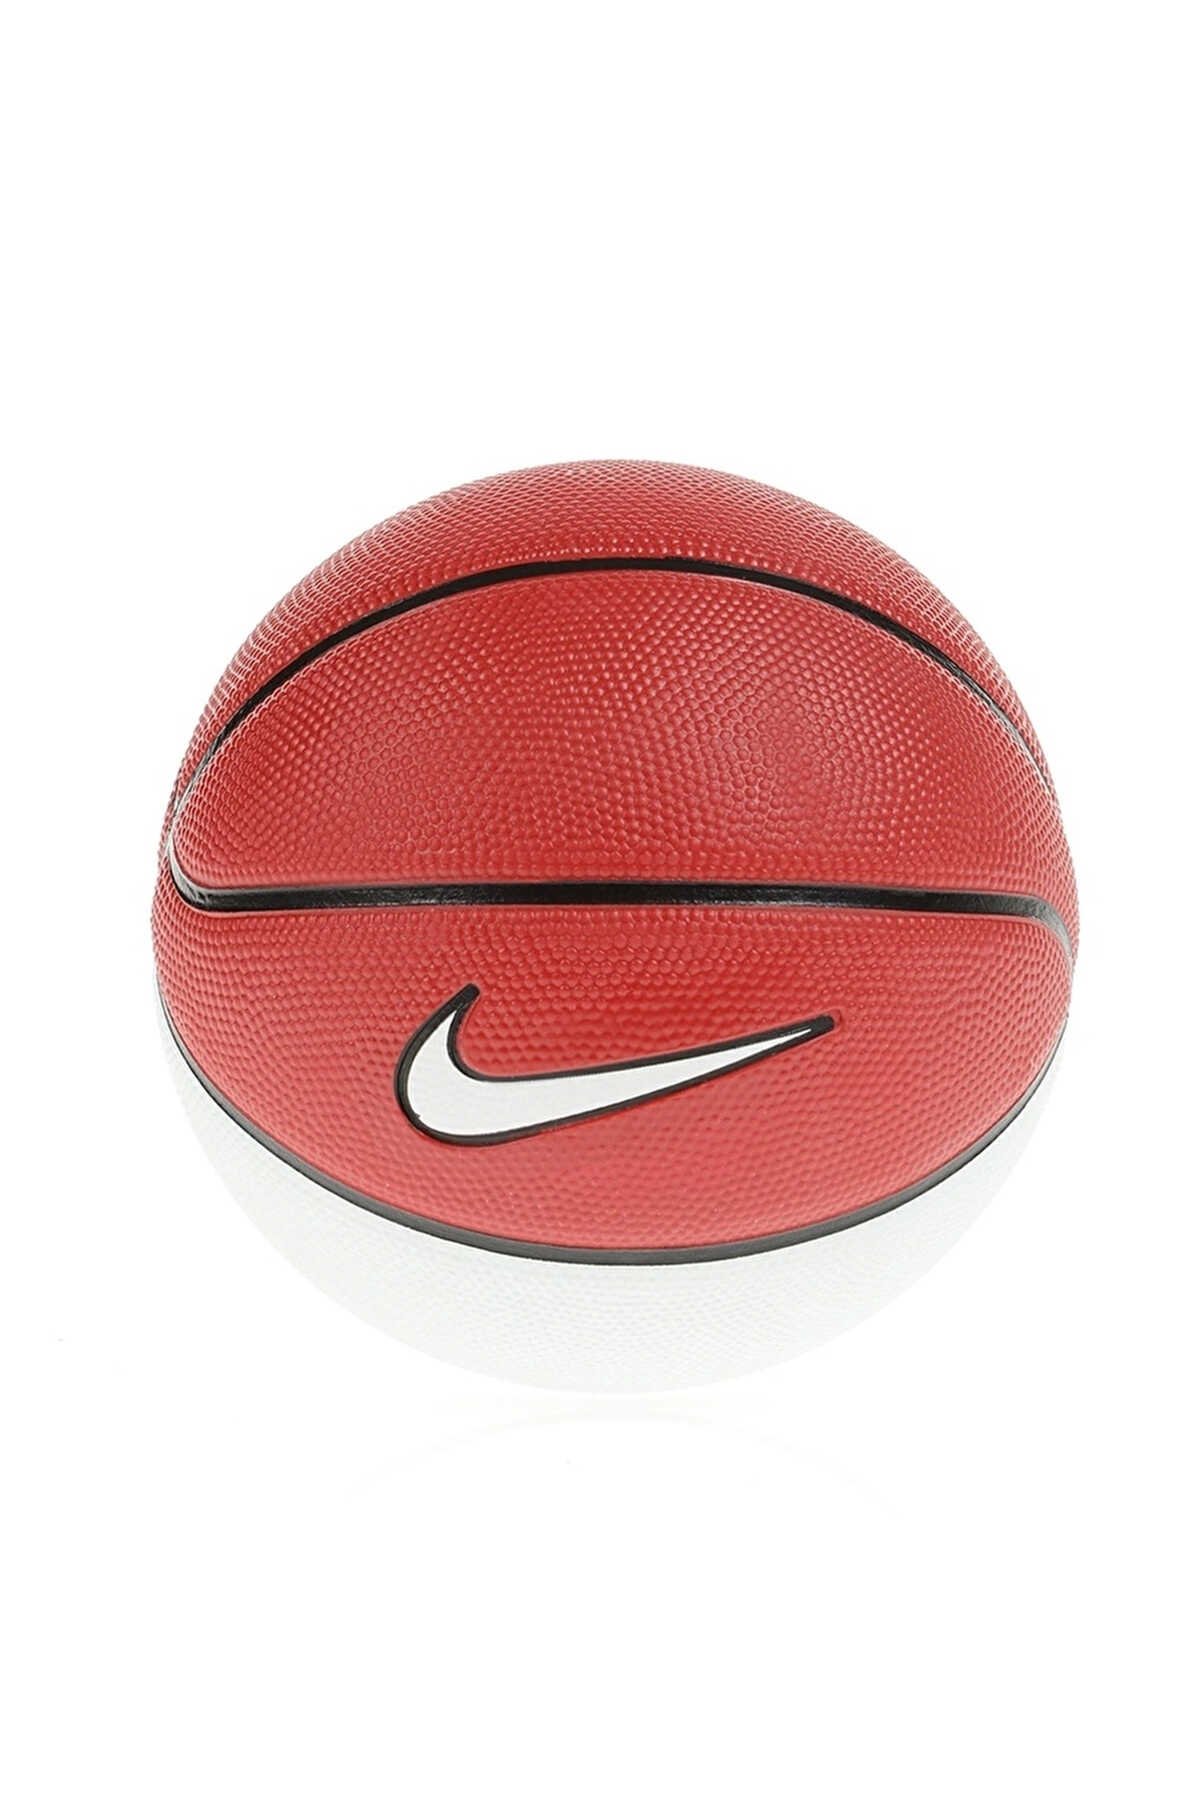 Nike - Nike SKILLS GYM Unisex Basket Topu Kırmızı